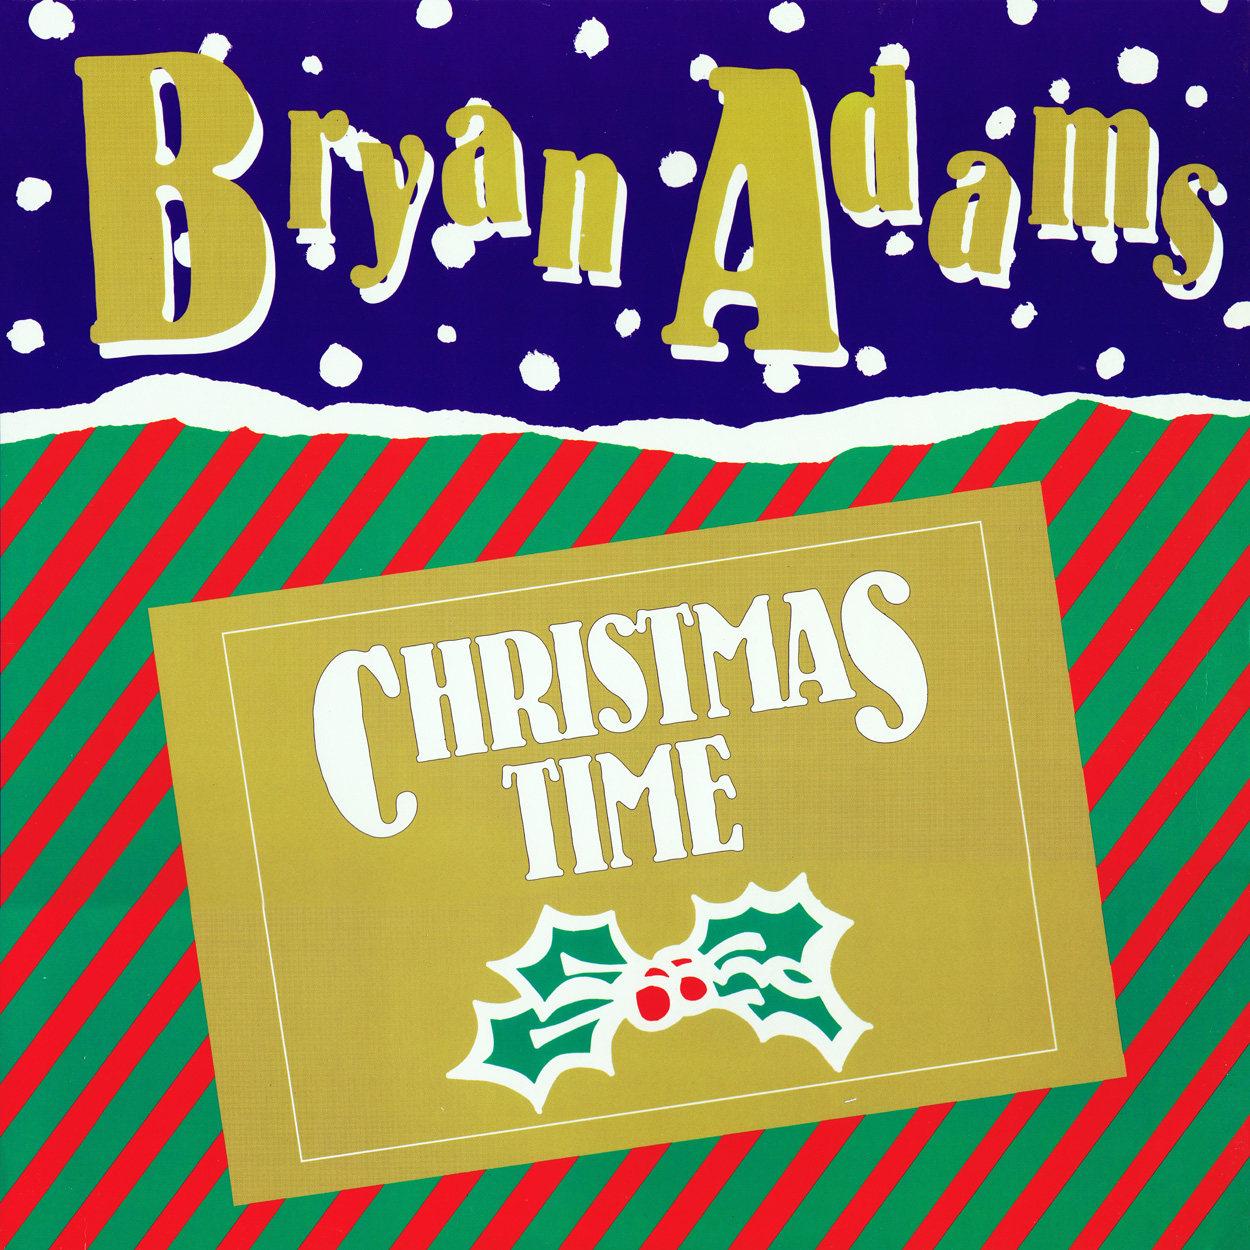 bryan_adams-christmas_time_s.jpg